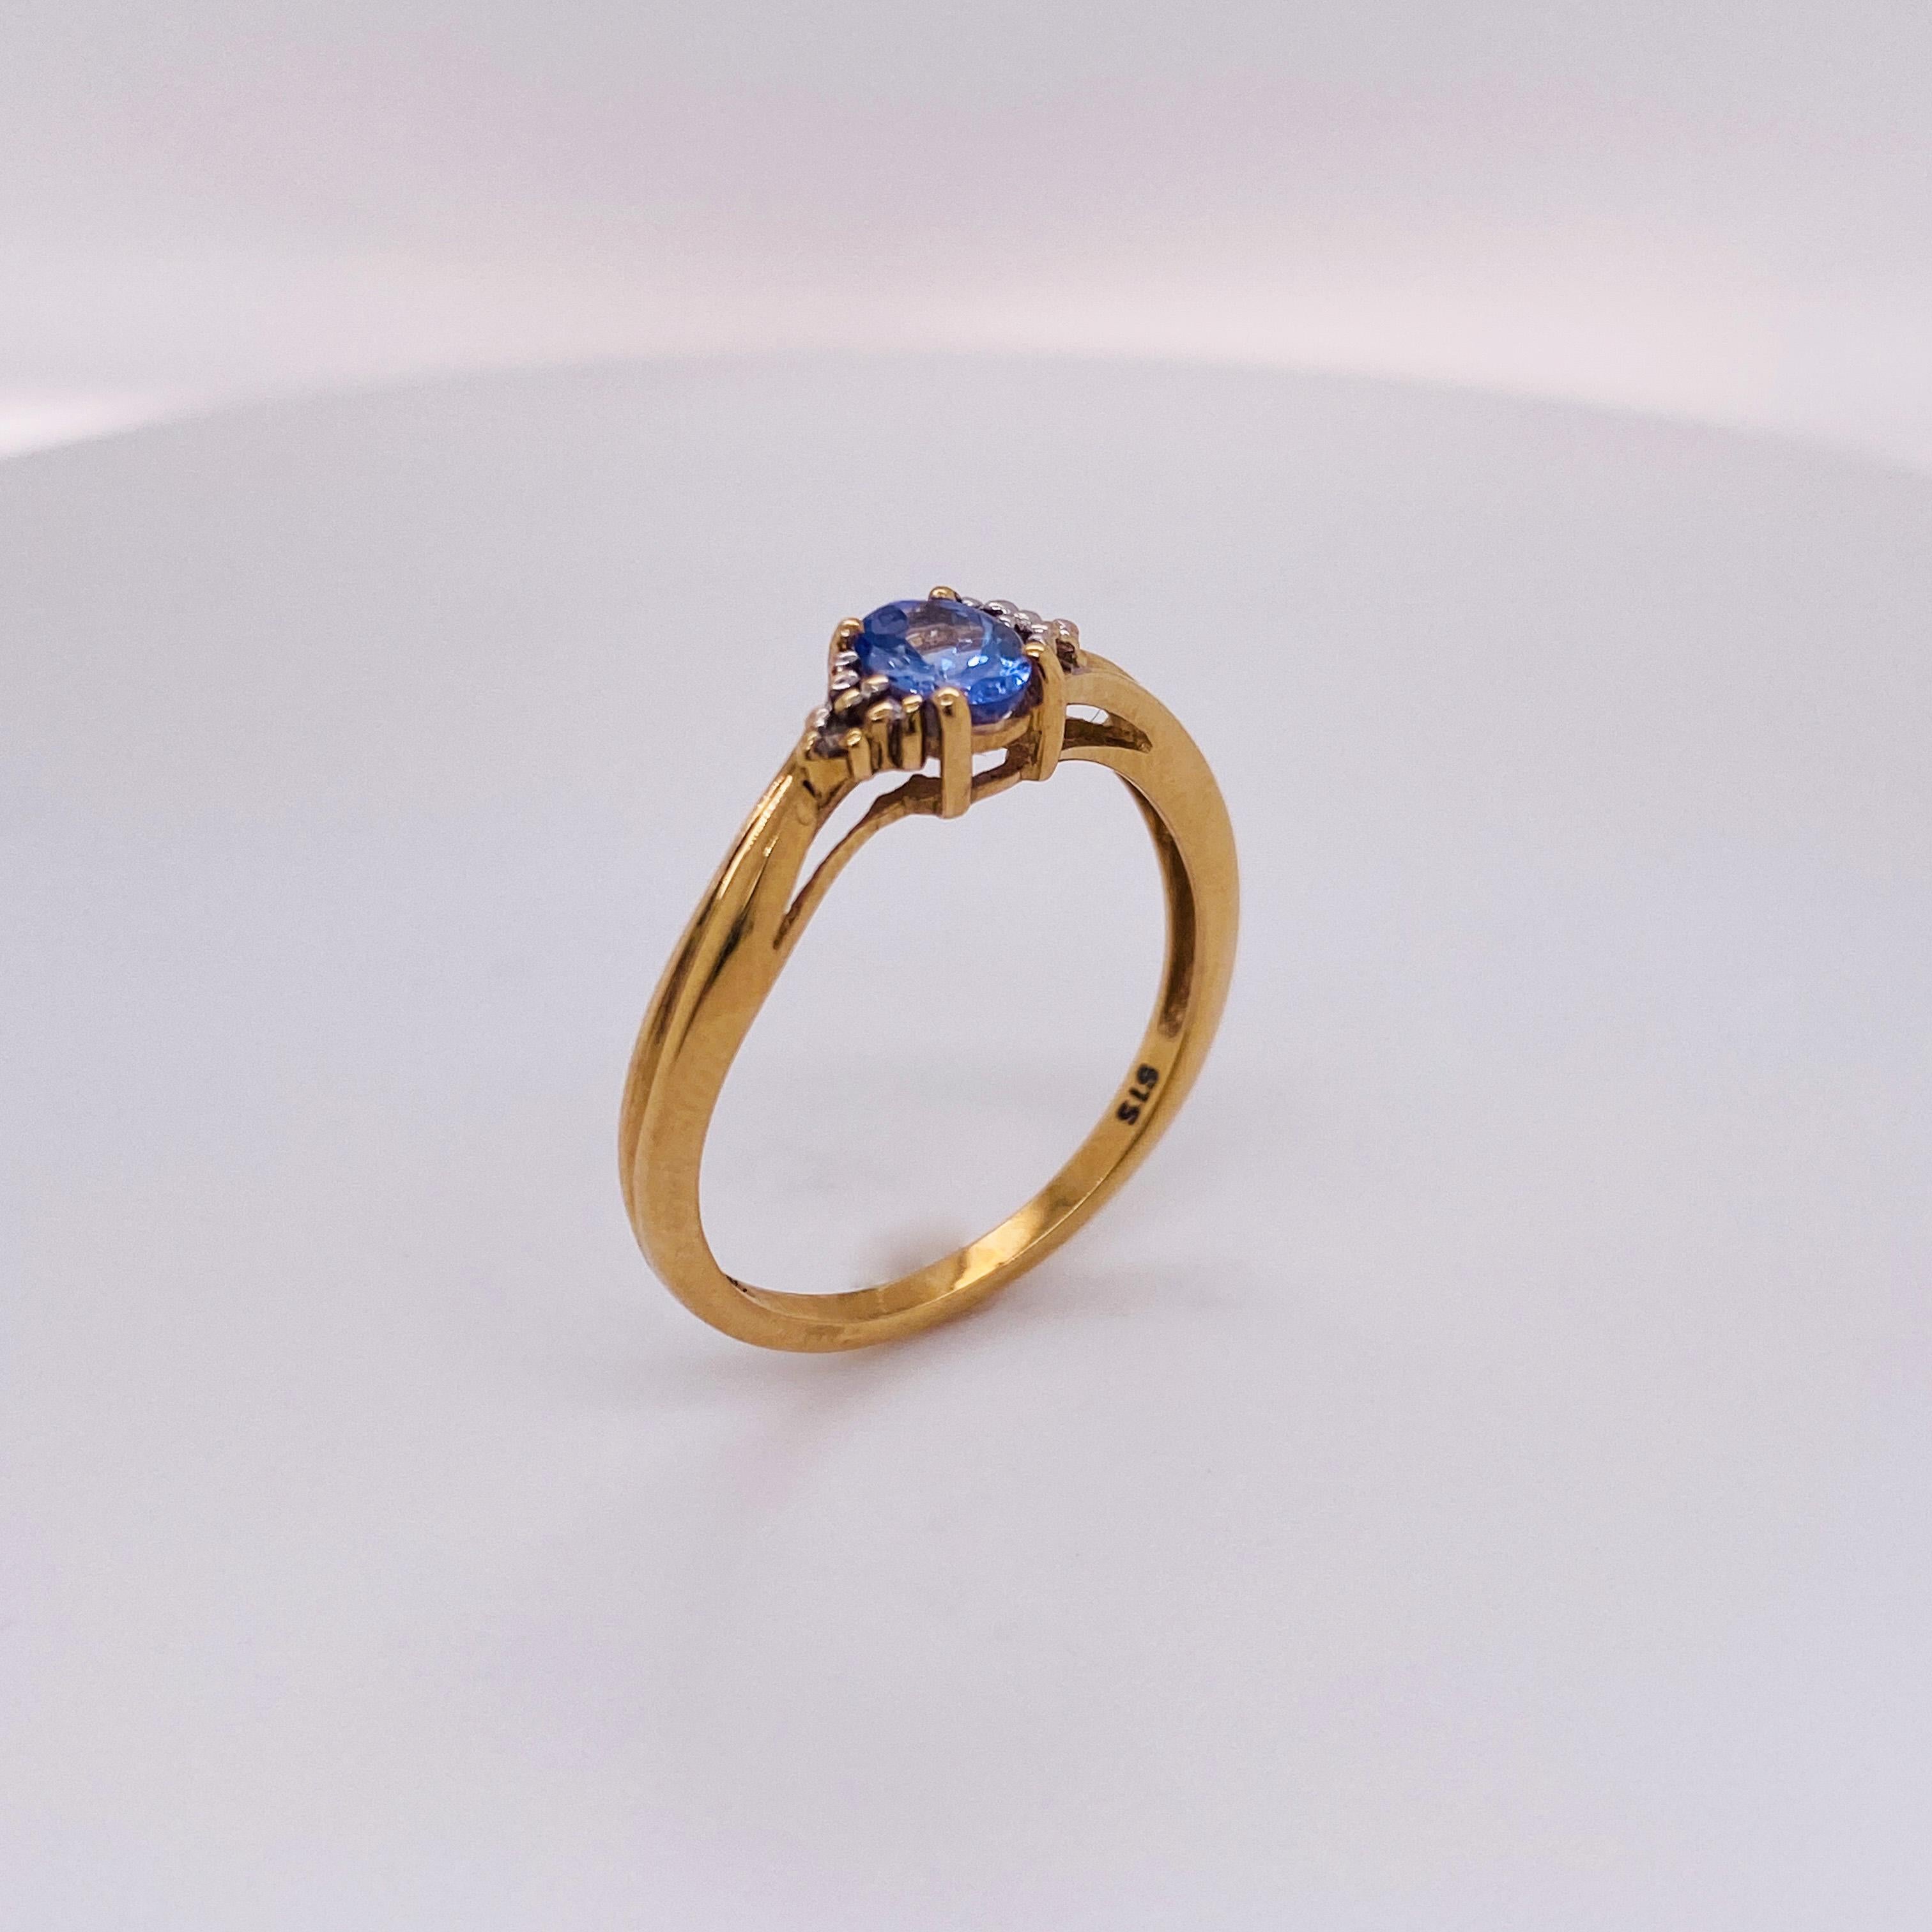 Modernist Tanzanite and Diamond Floral Ring 10k Yellow Gold, Blue Flower, 0.35 Carat Tanz